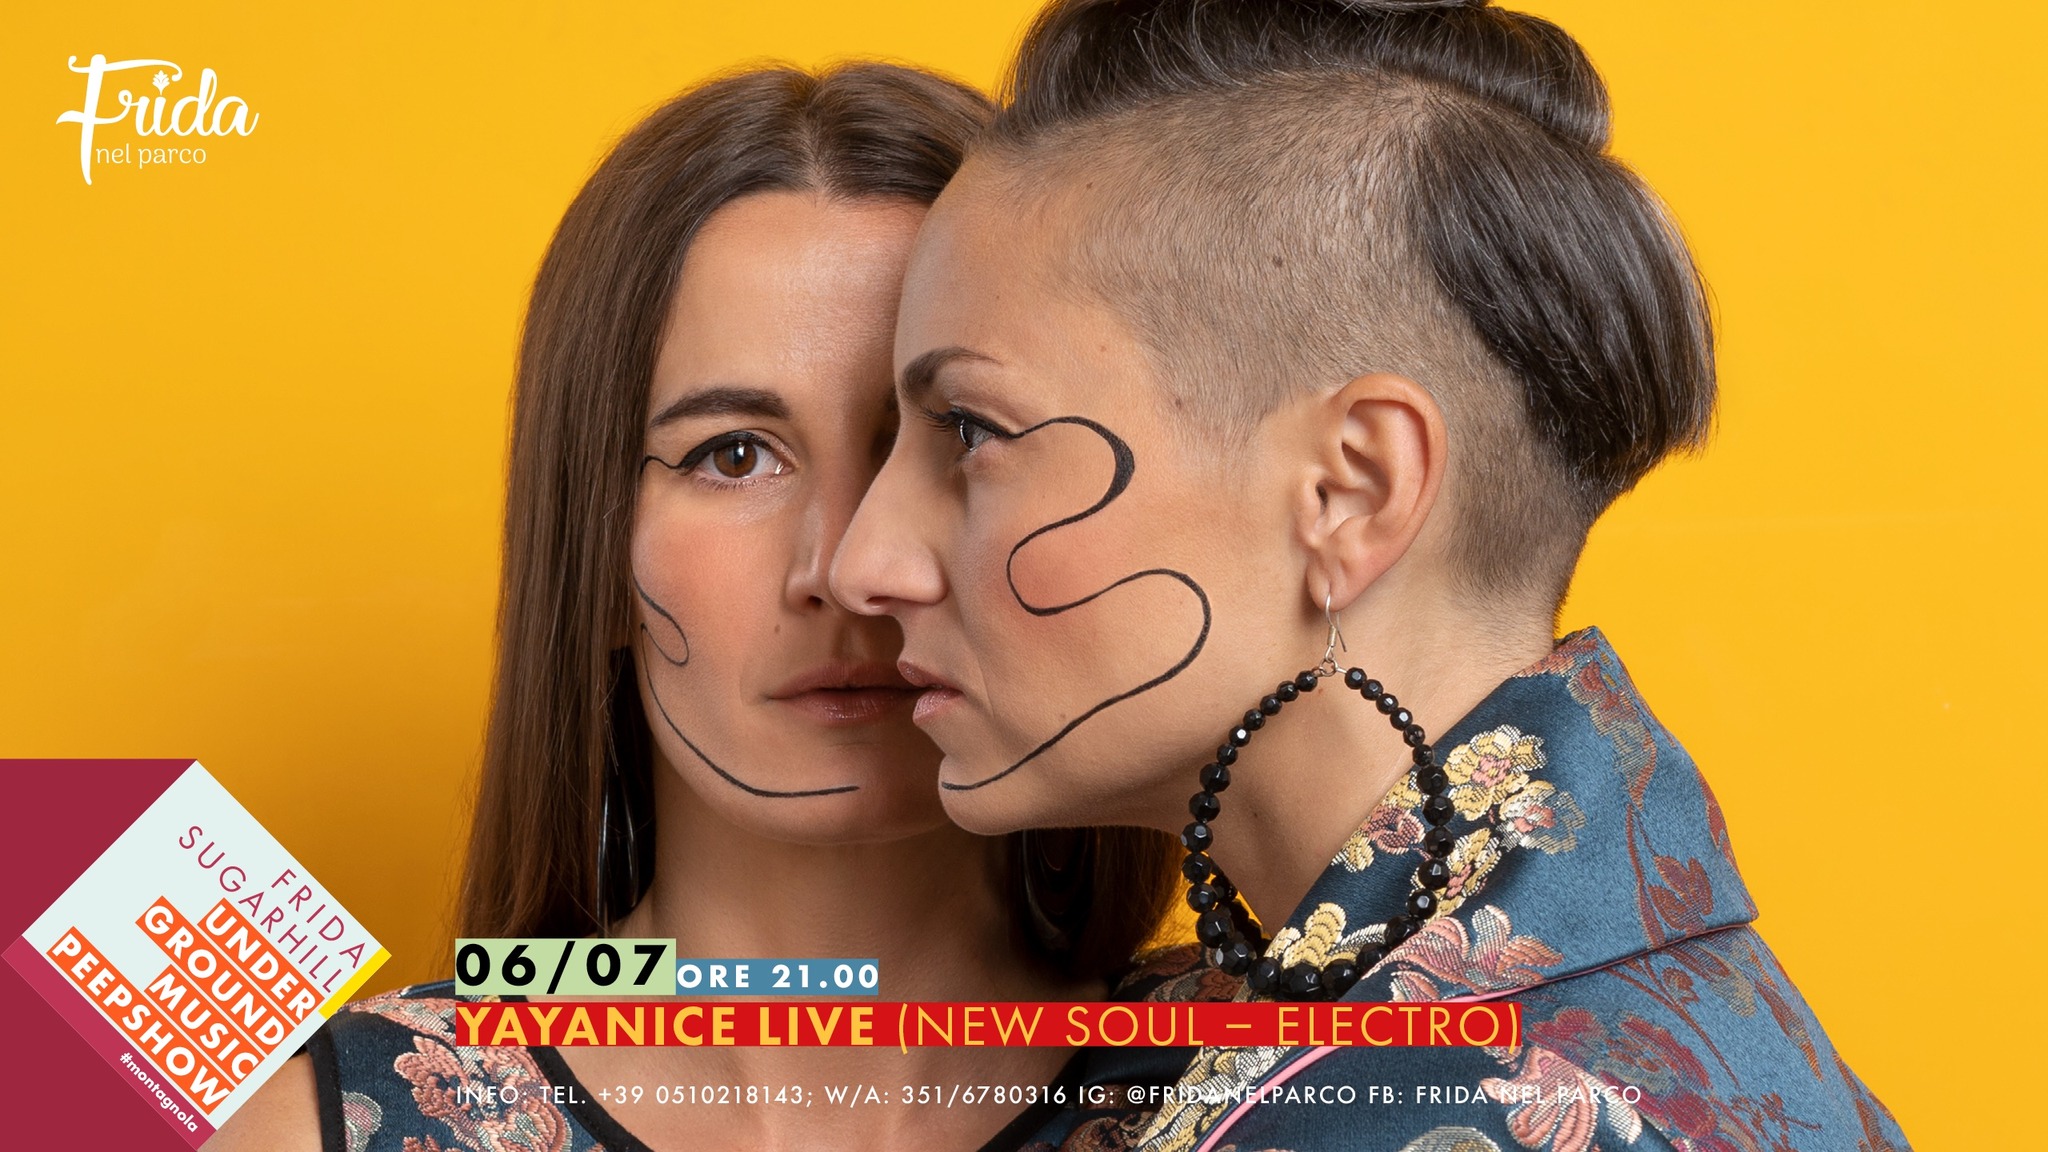 Yayanice live (new soul – electro).